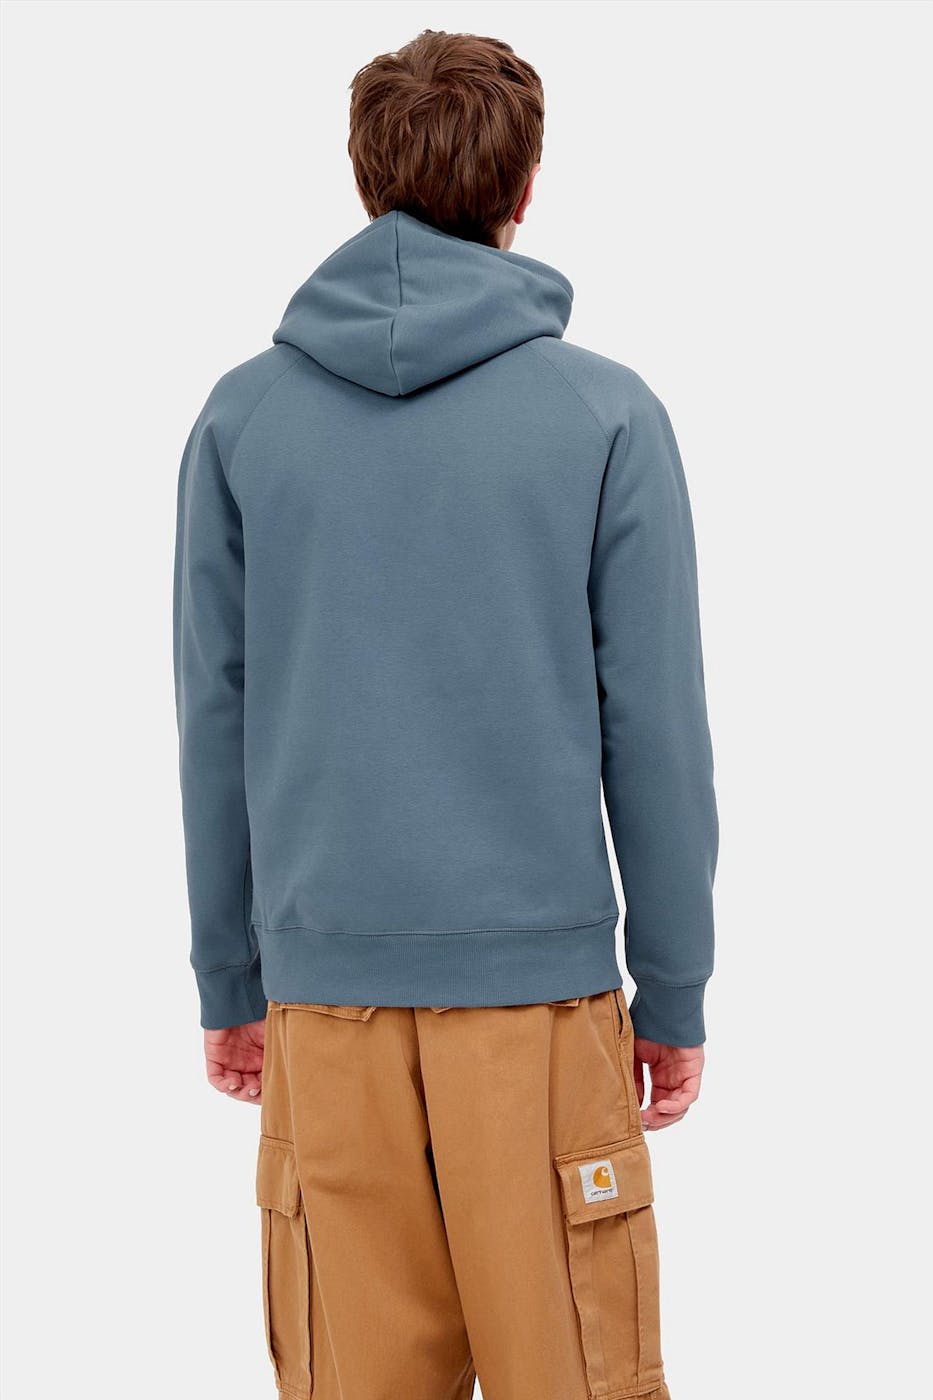 Carhartt WIP - Blauwe Hooded Chase sweater